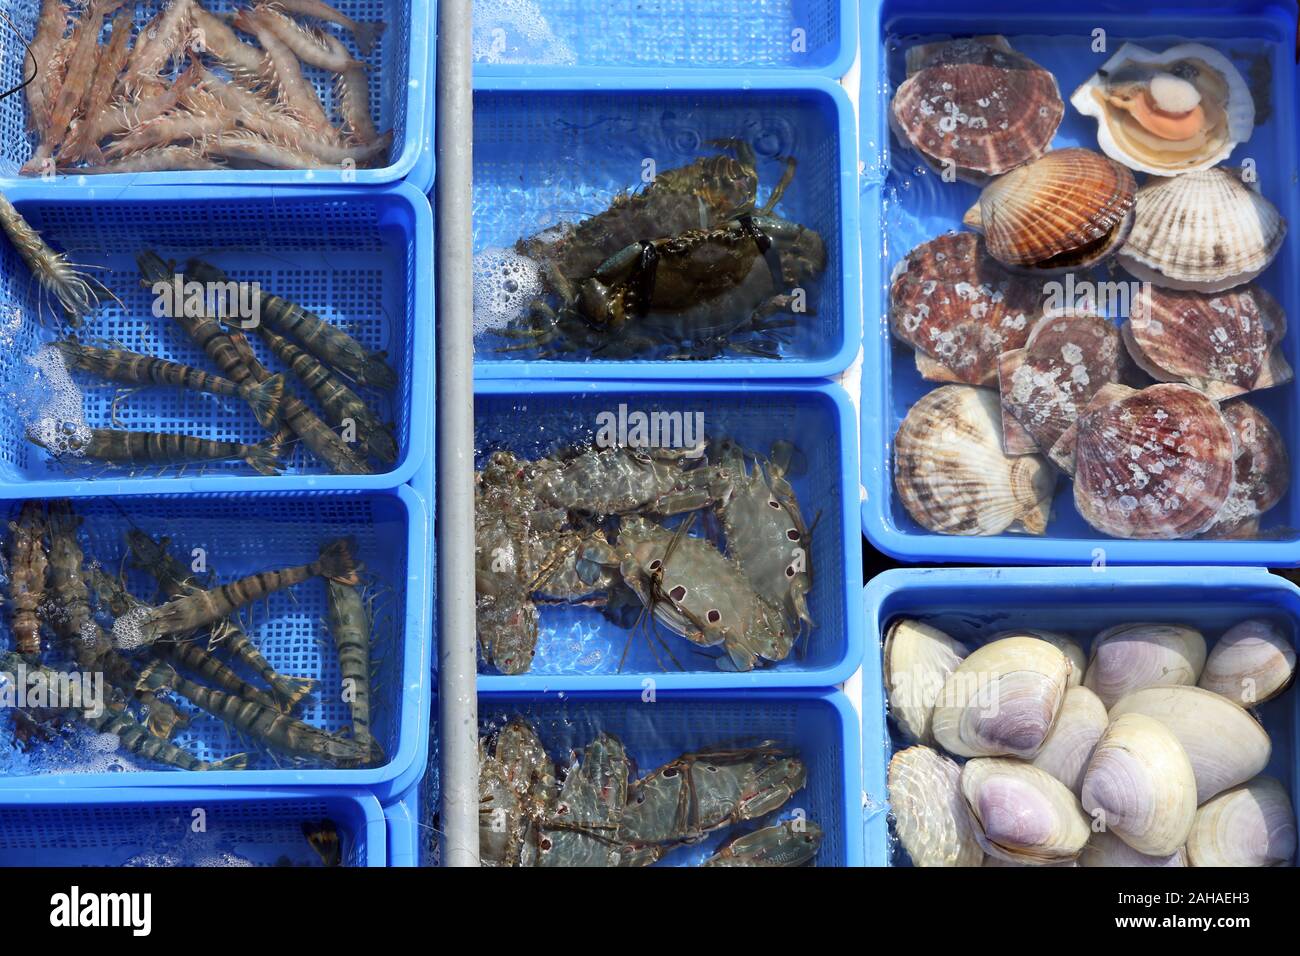 09.12.2017, Hong Kong, Hong Kong, China - Mussels, crabs and shrimps in water basins at the fish market in Lei Yue Mun. 00S171209D156CAROEX.JPG [MODEL Stock Photo